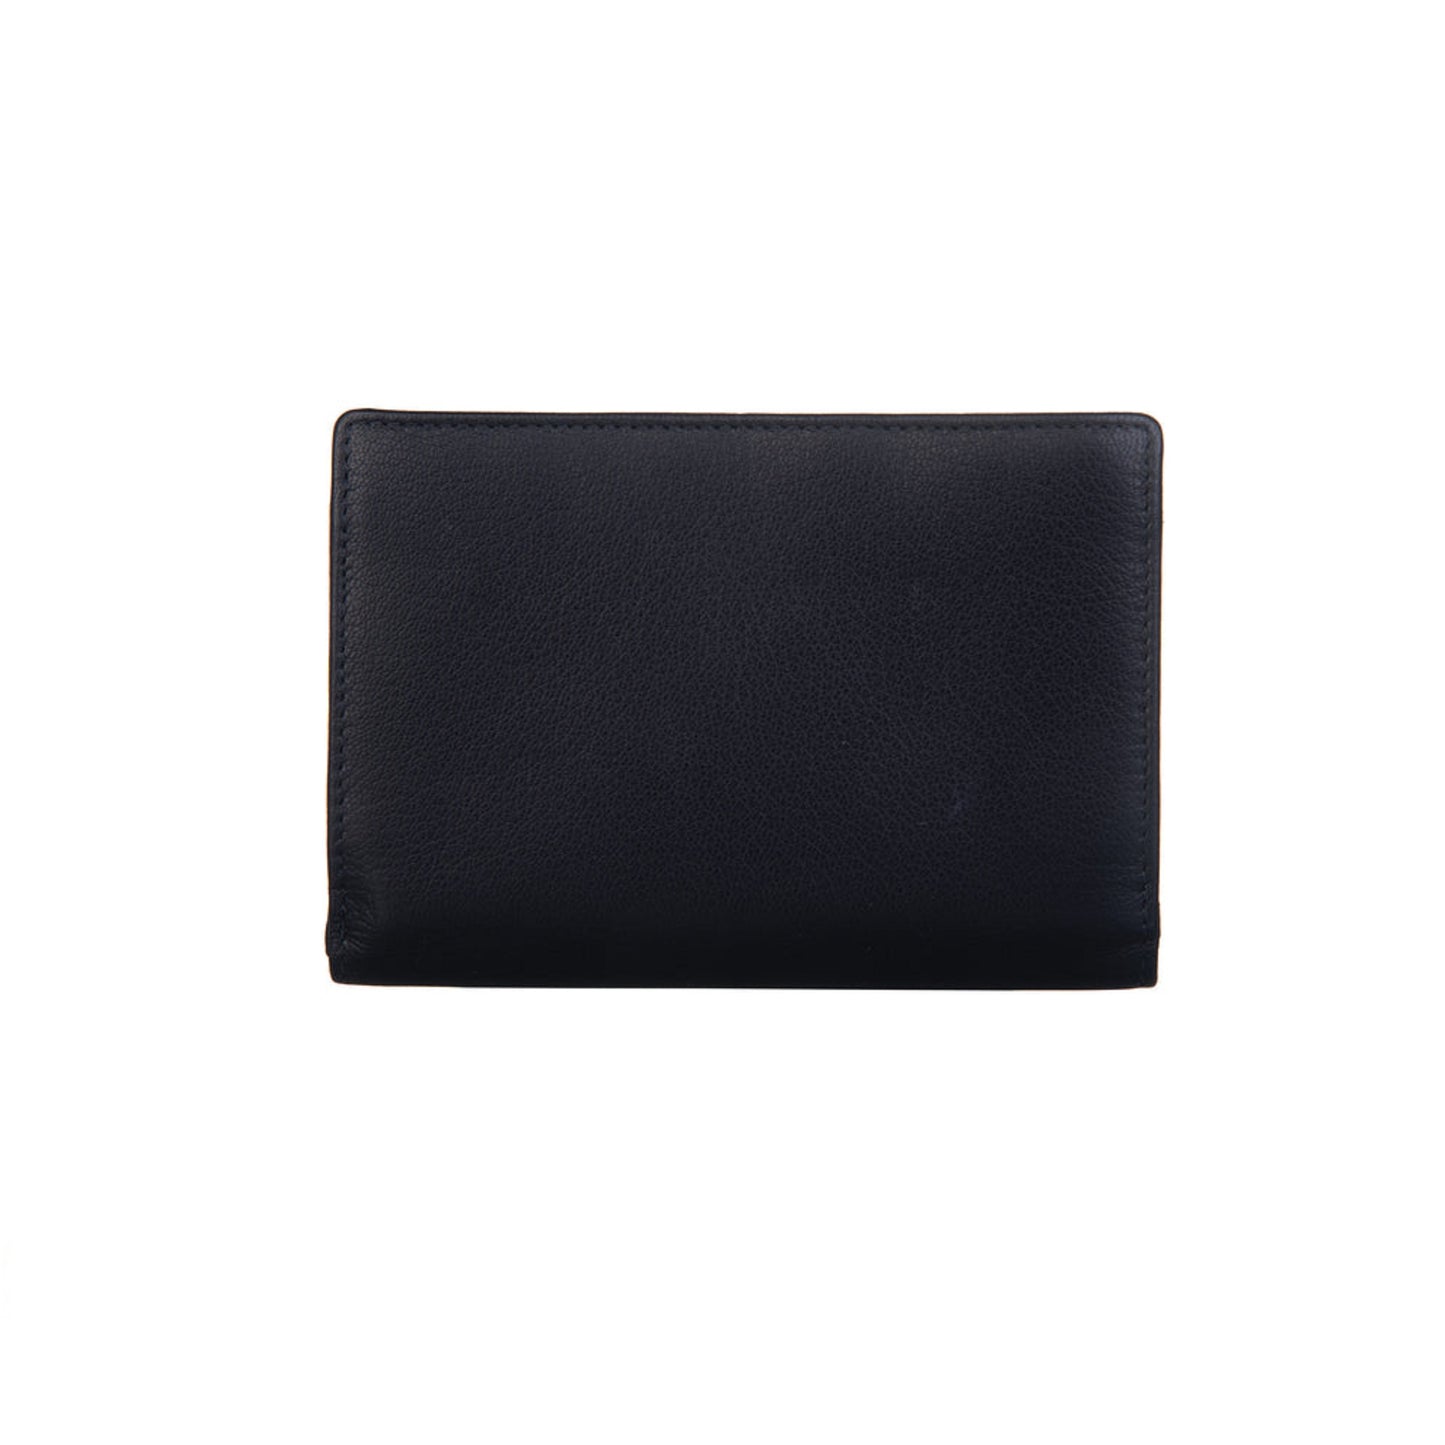 Shiloh Large Tri Fold Leather Purse - Black